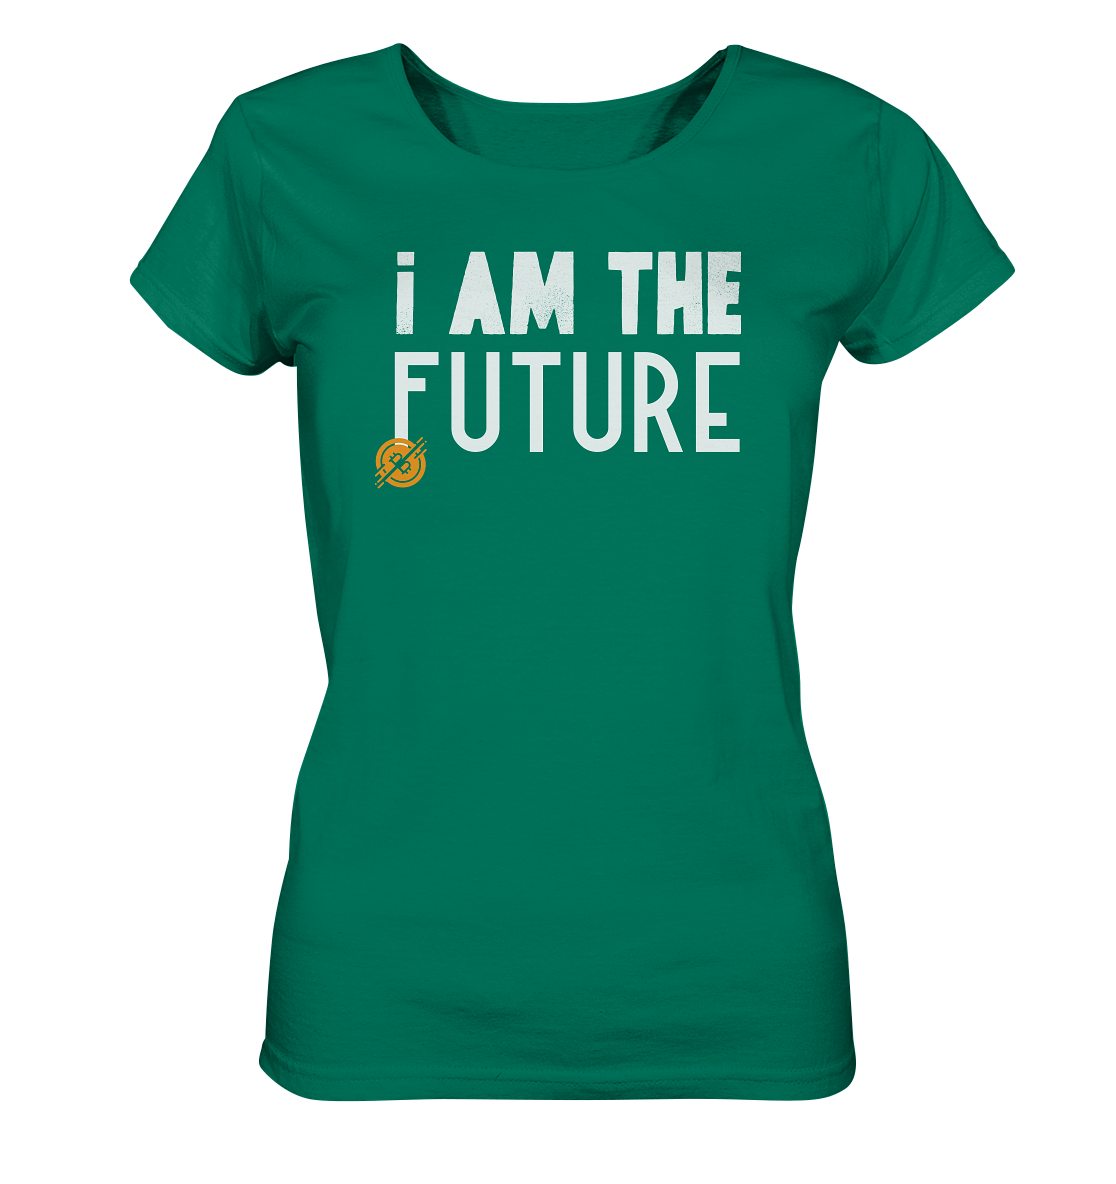 Bitcoin "I am the future" - Ladies Organic Shirt